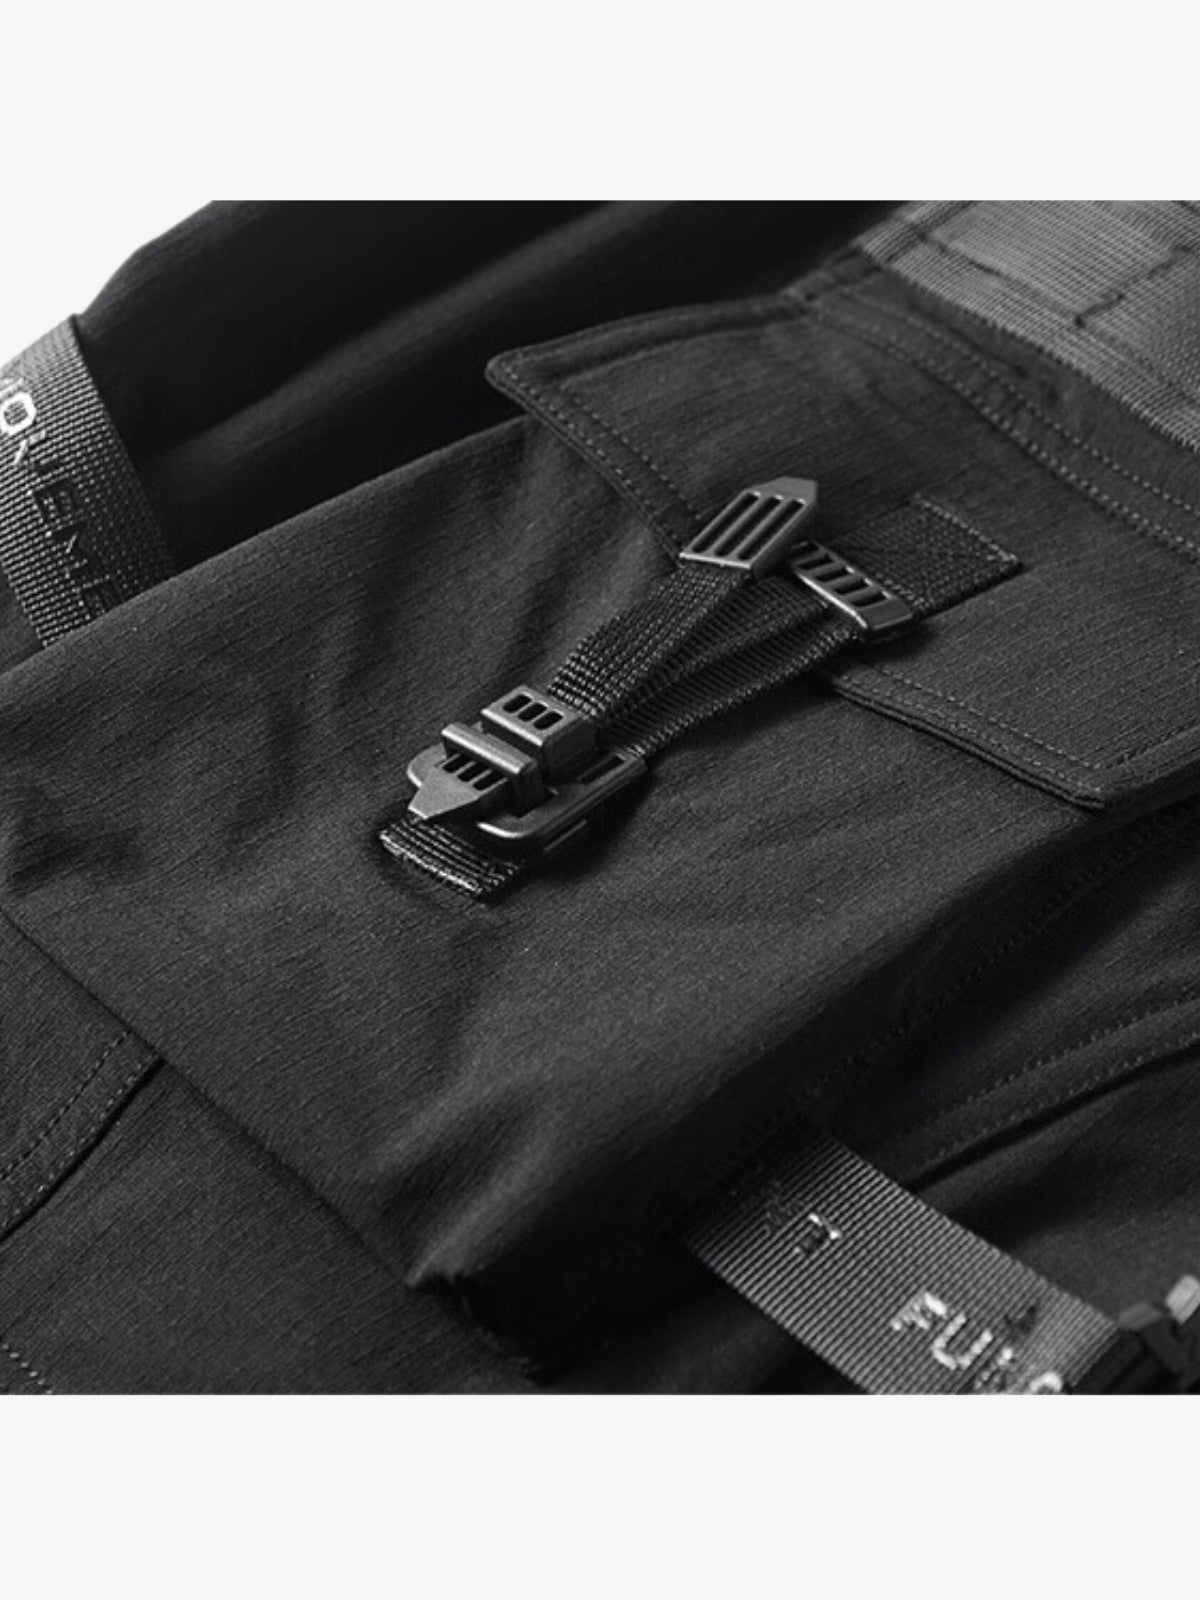 CyberFlex Zip Pants - Futuristic Style with Versatile Pockets and Zipper